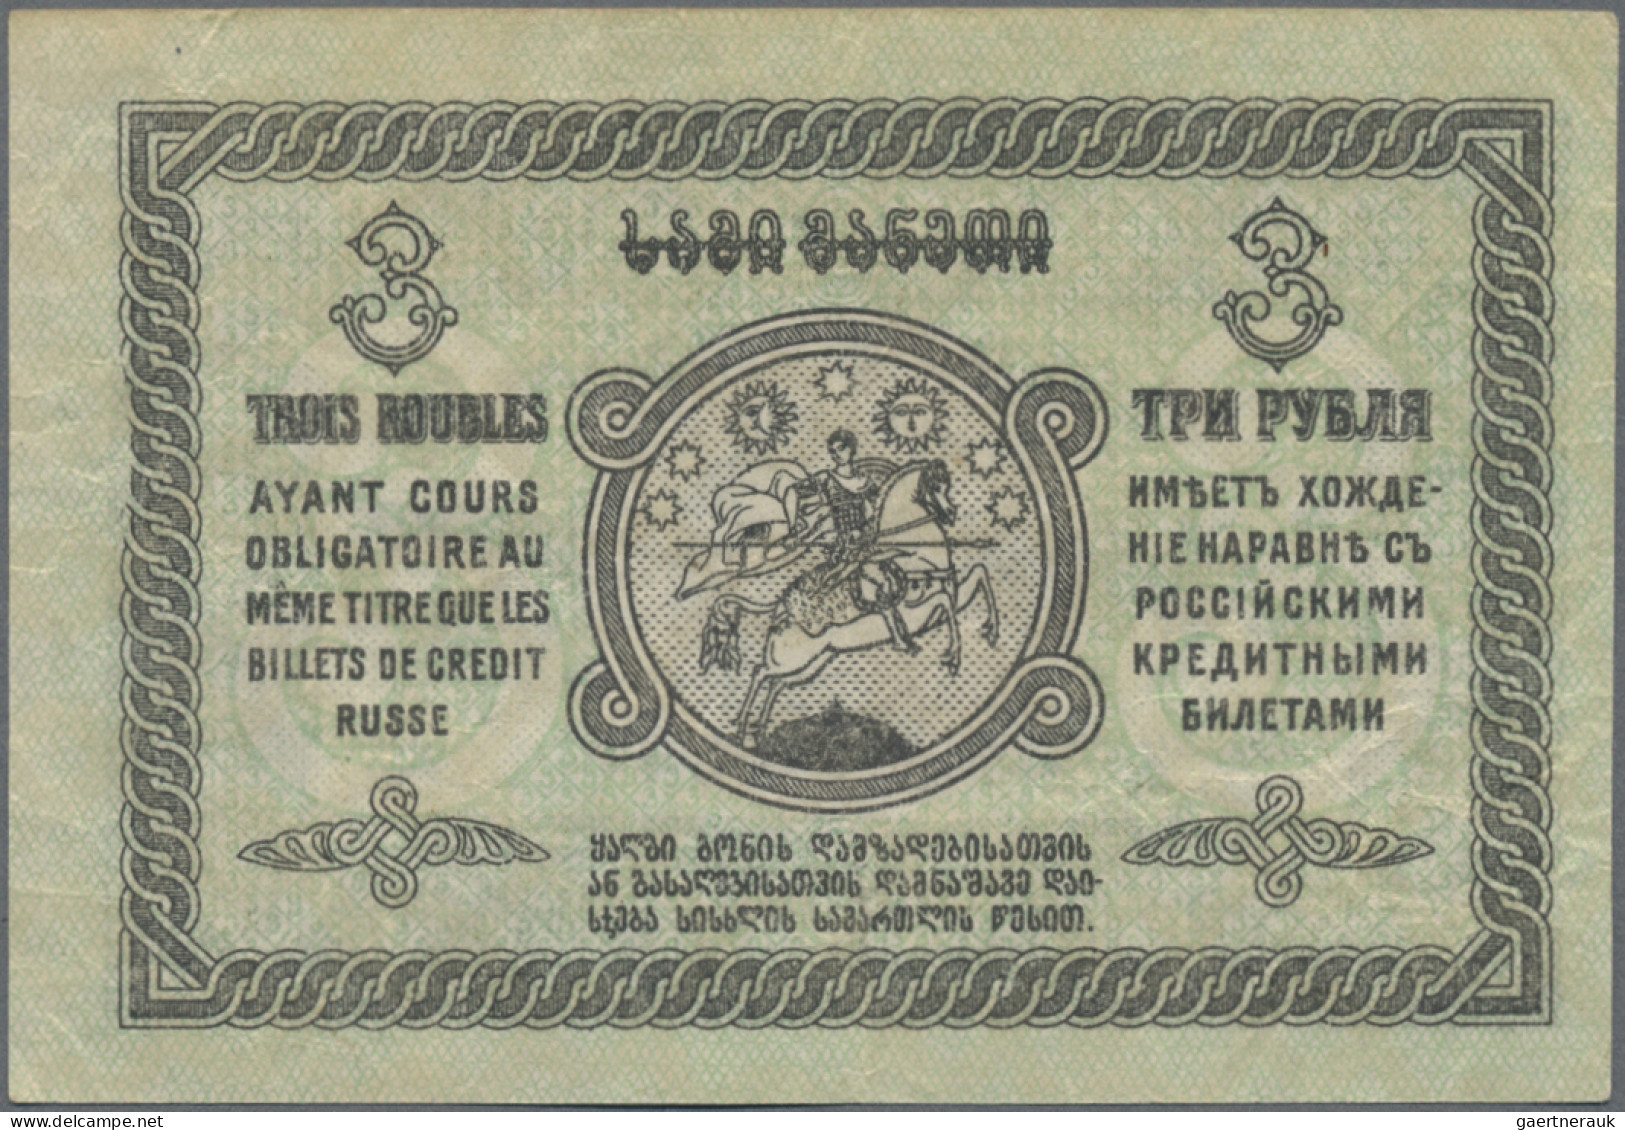 Georgia: Georgia Autonomous Republic, very nice lot with 37 banknotes and tax vo